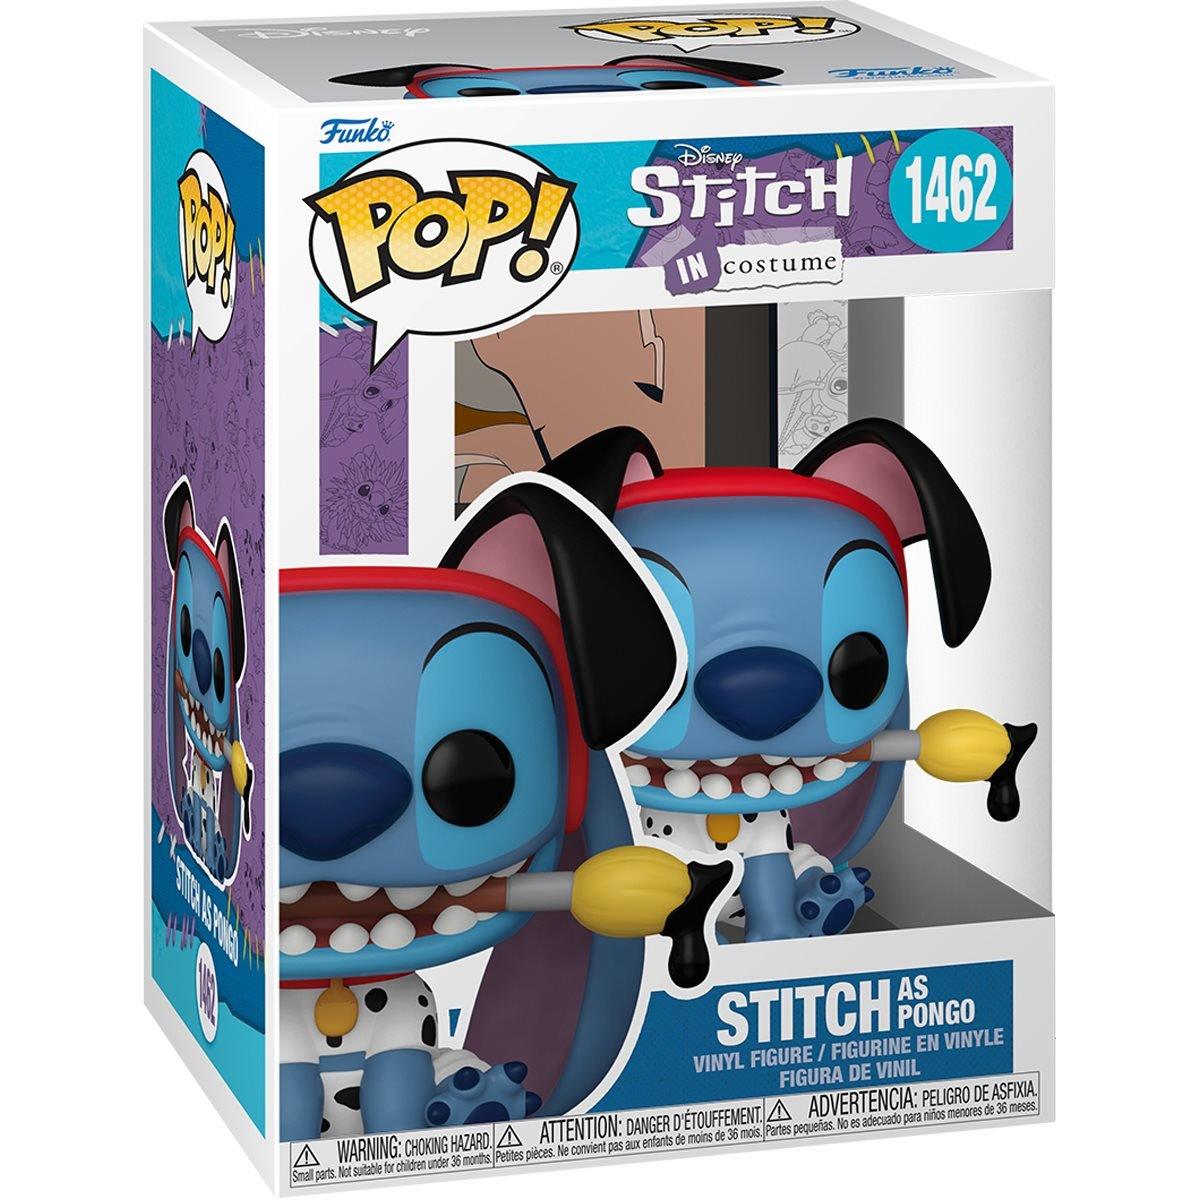 Lilo & Stitch - Costume Stitch as Pongo Pop! Vinyl